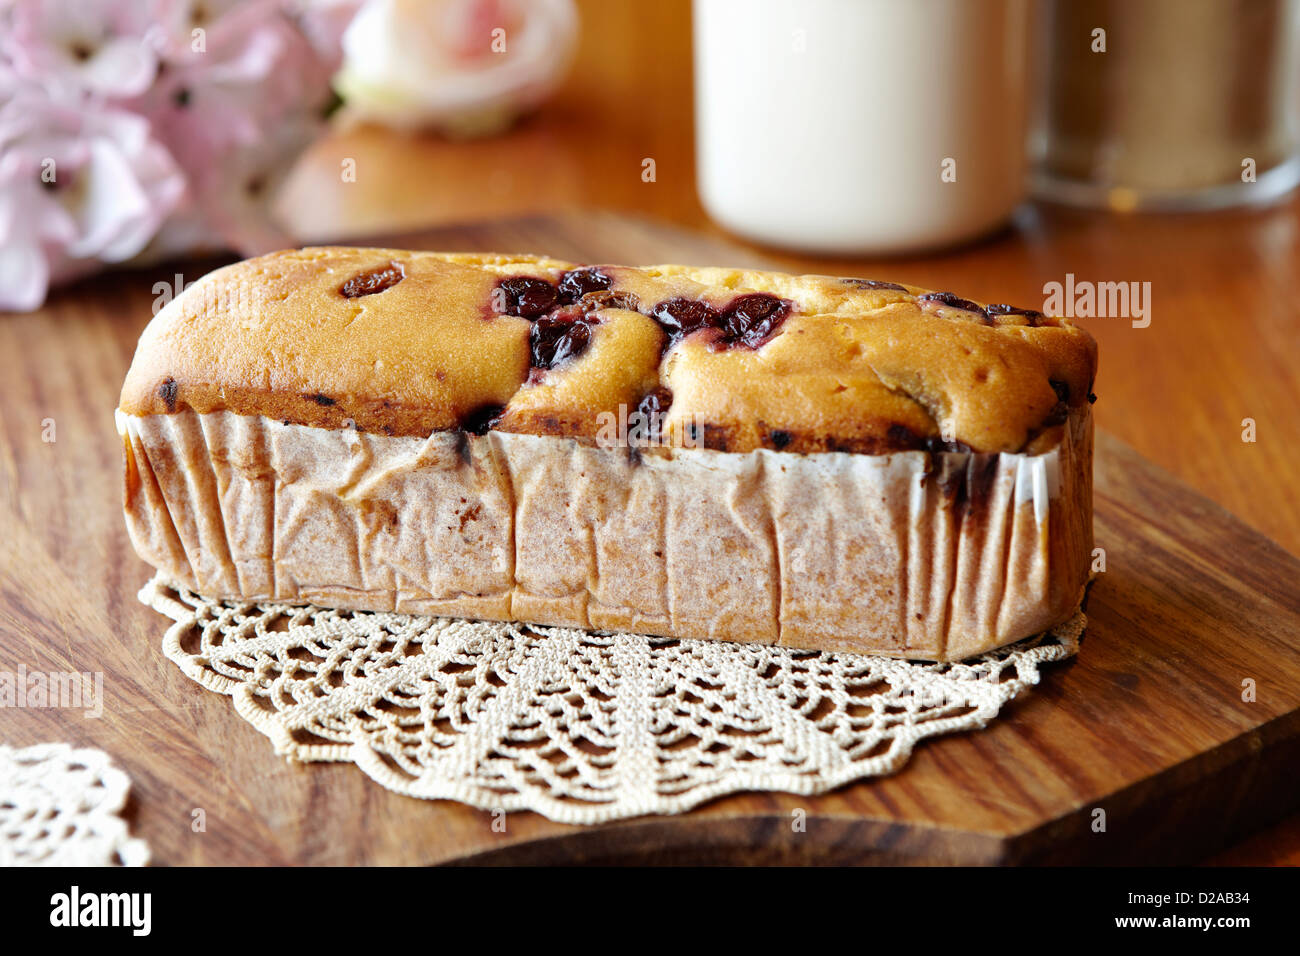 Baked fruit cake on table Stock Photo